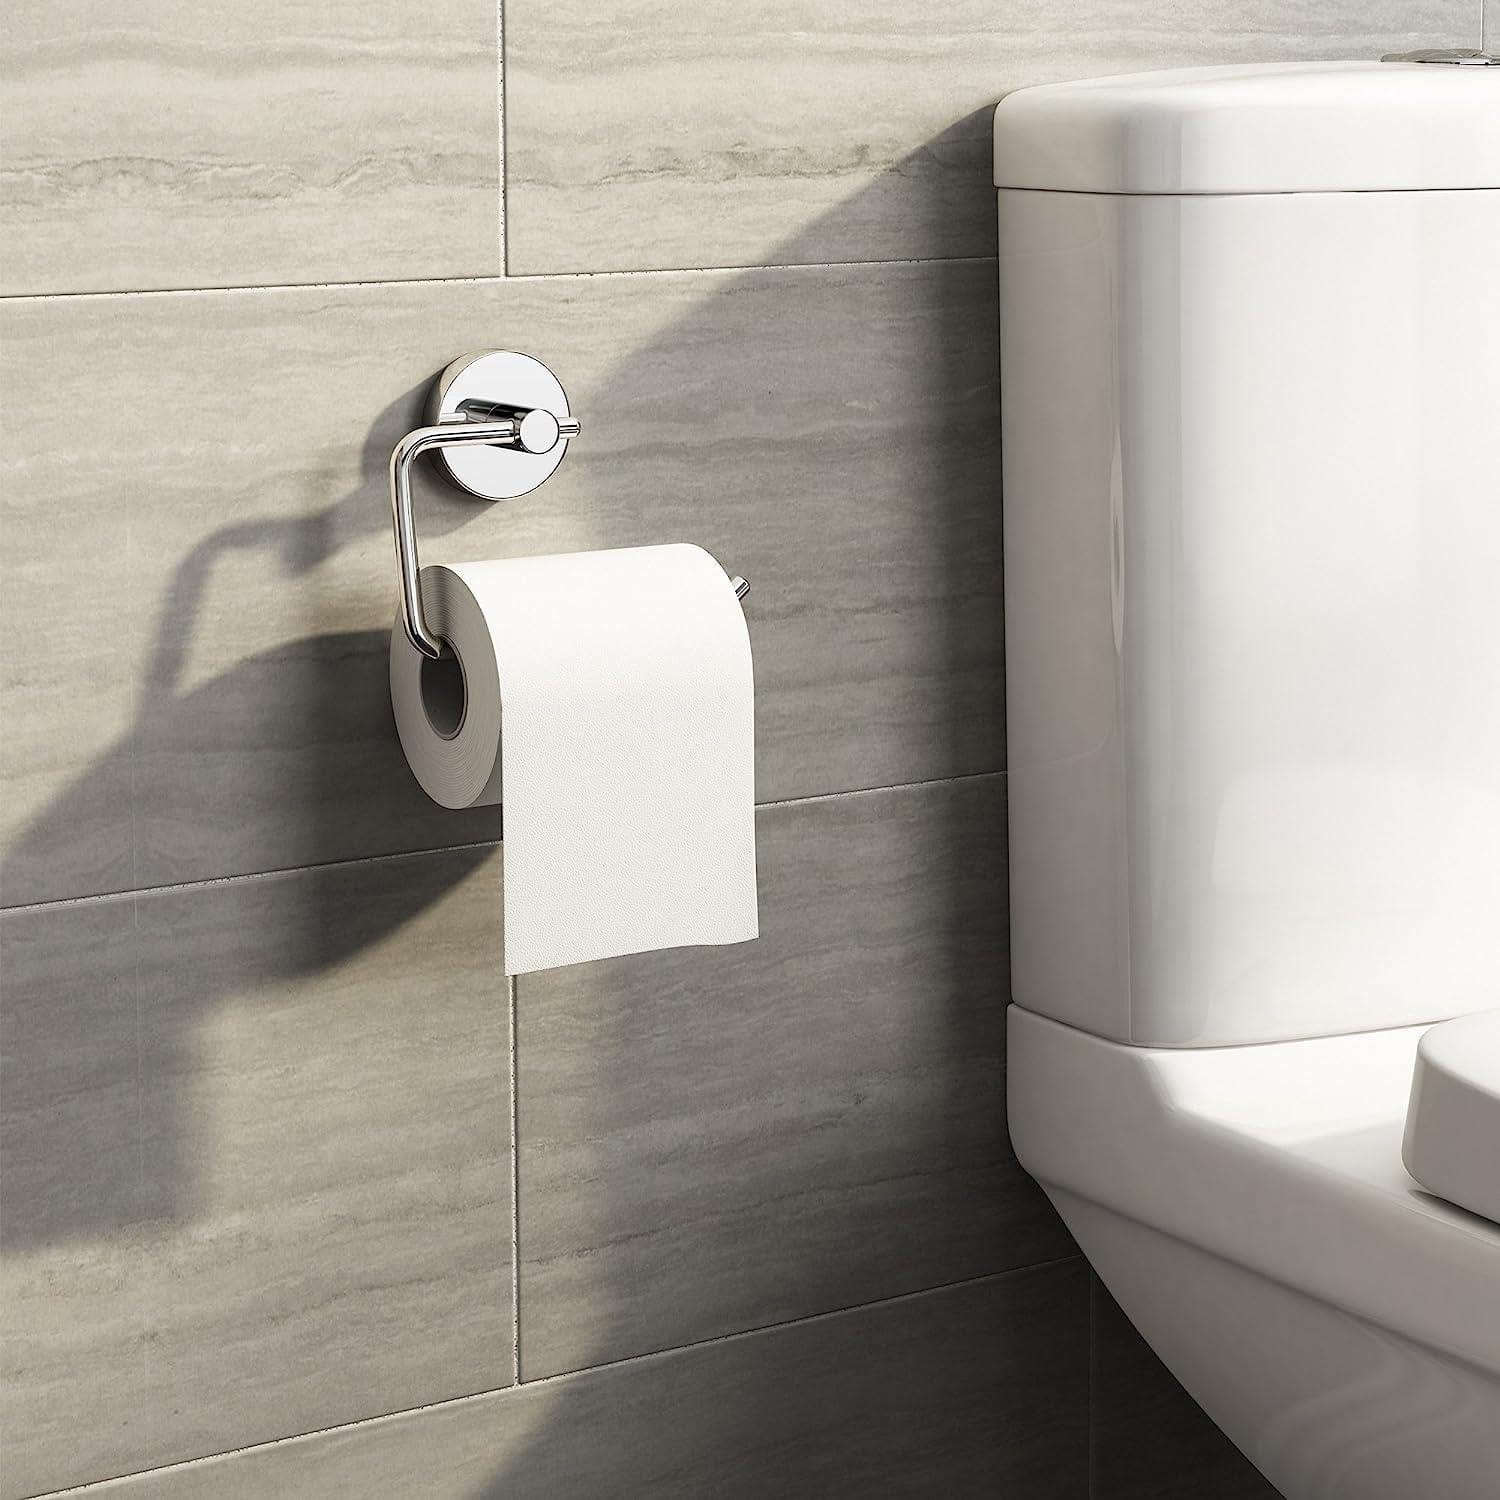 iBathUK Bathroom > Bathroom Accessories iBathUK Toilet Roll Holder Round Bathroom Accessory Chrome